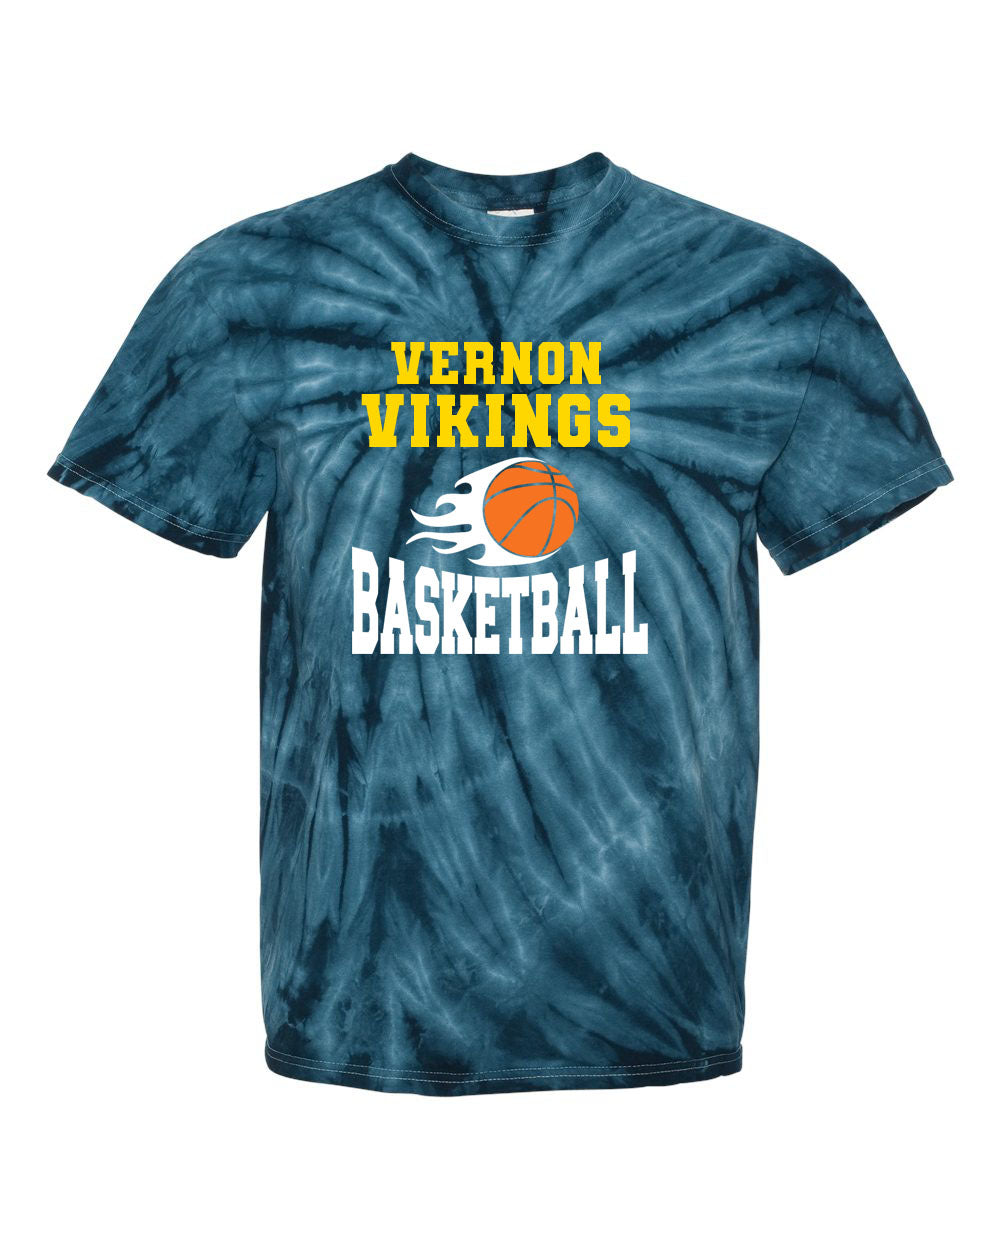 Vikings Basketball Tie Dye t-shirt Design 4